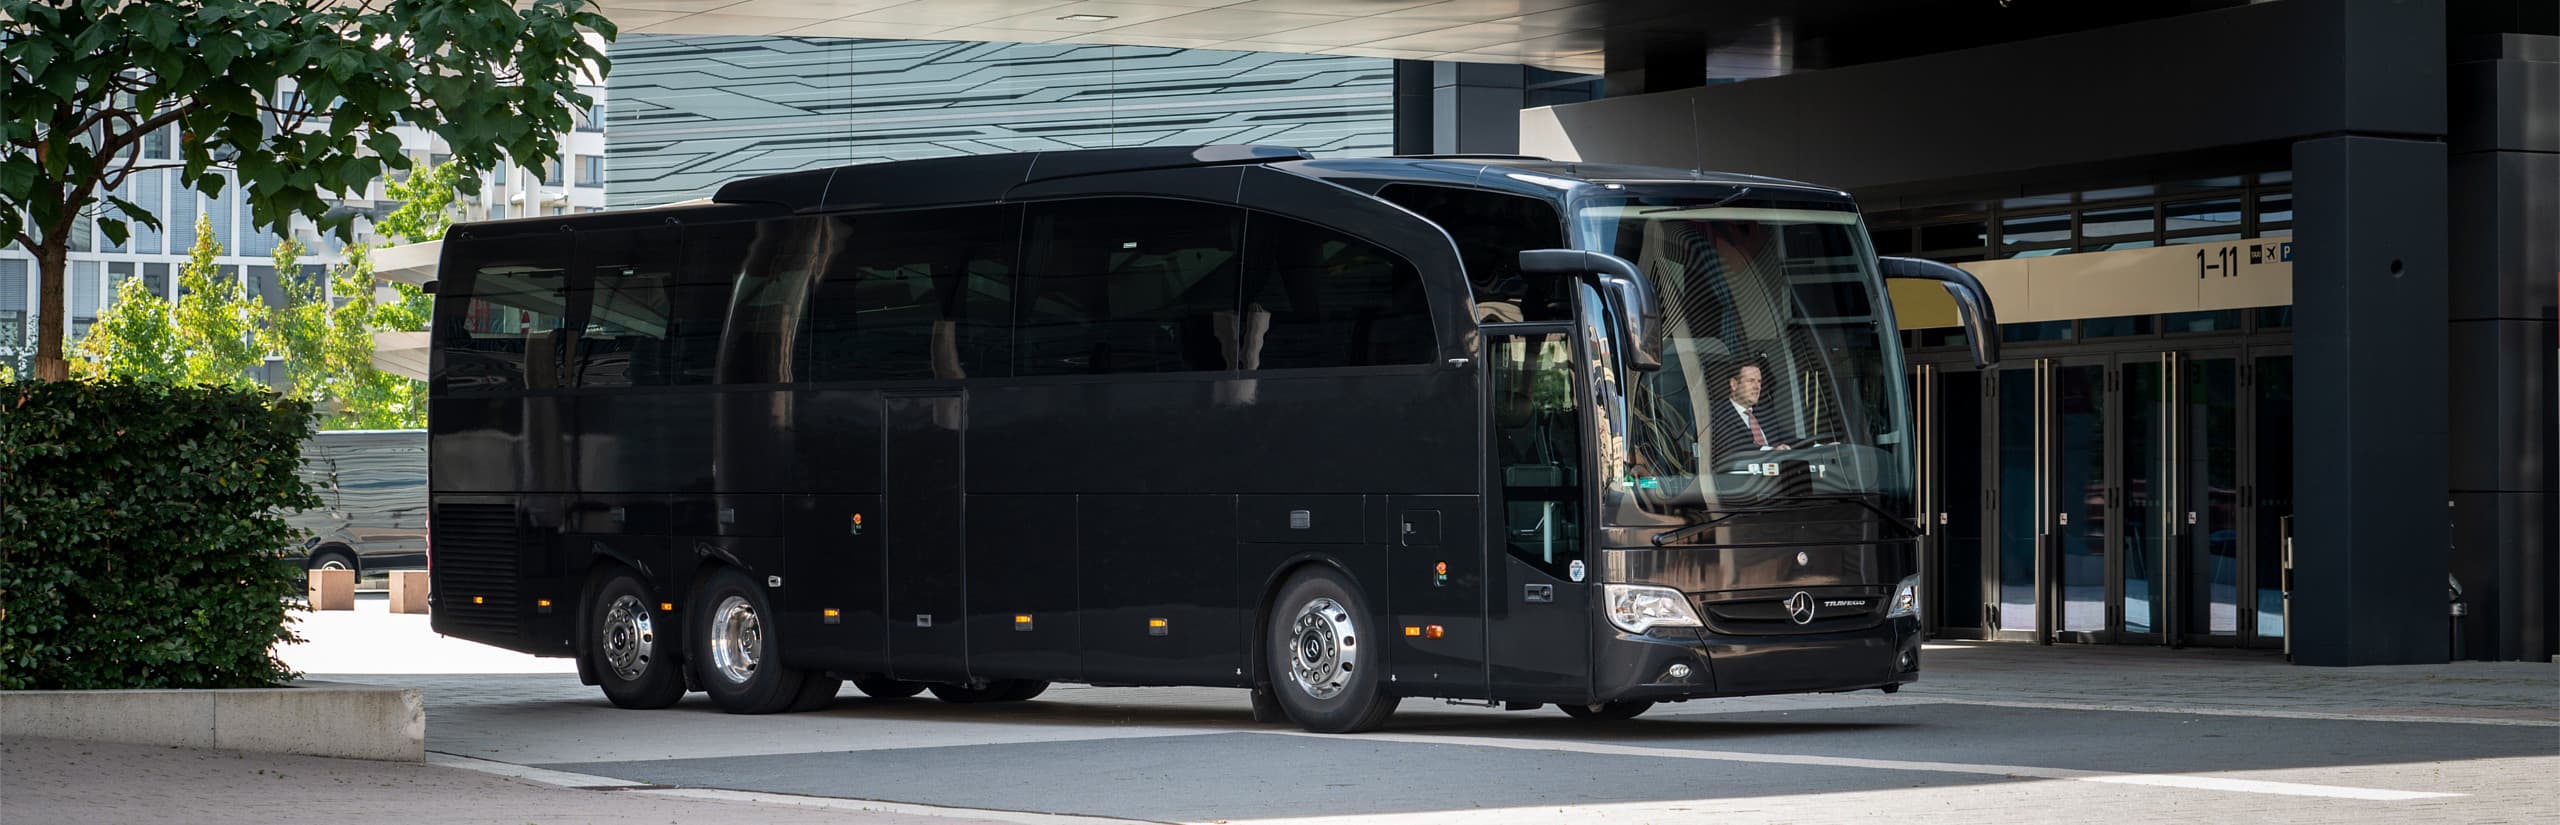 Luxury bus – Vipliner – Conference bus – Vipbus – for hire in Düsseldorf